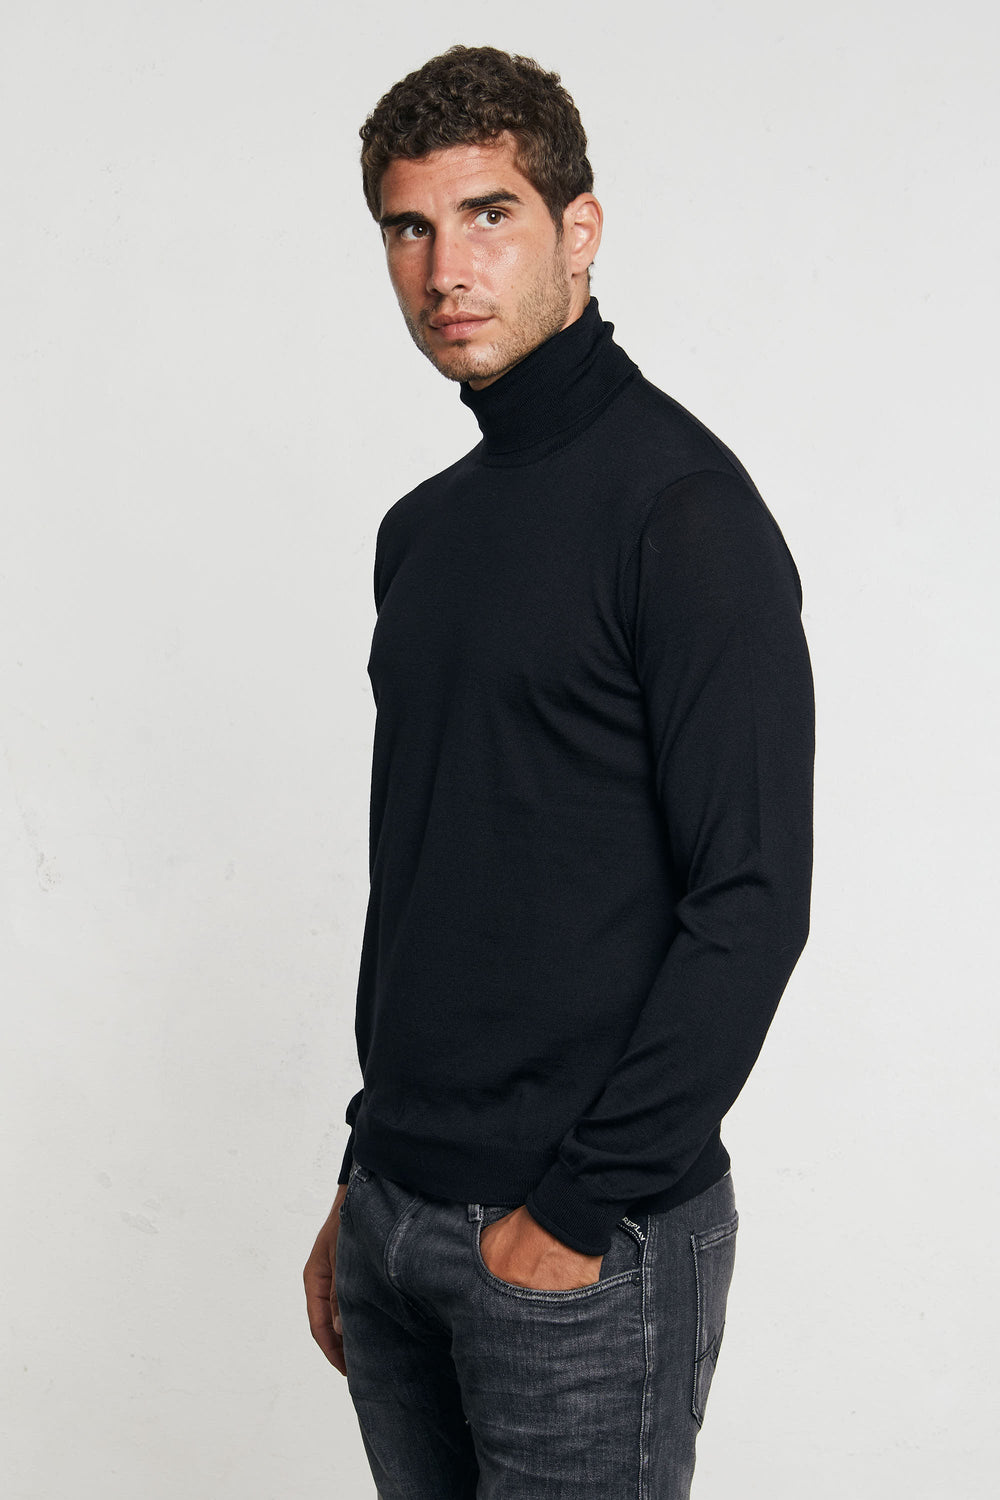 Tagliatore Men's turtleneck sweaters online